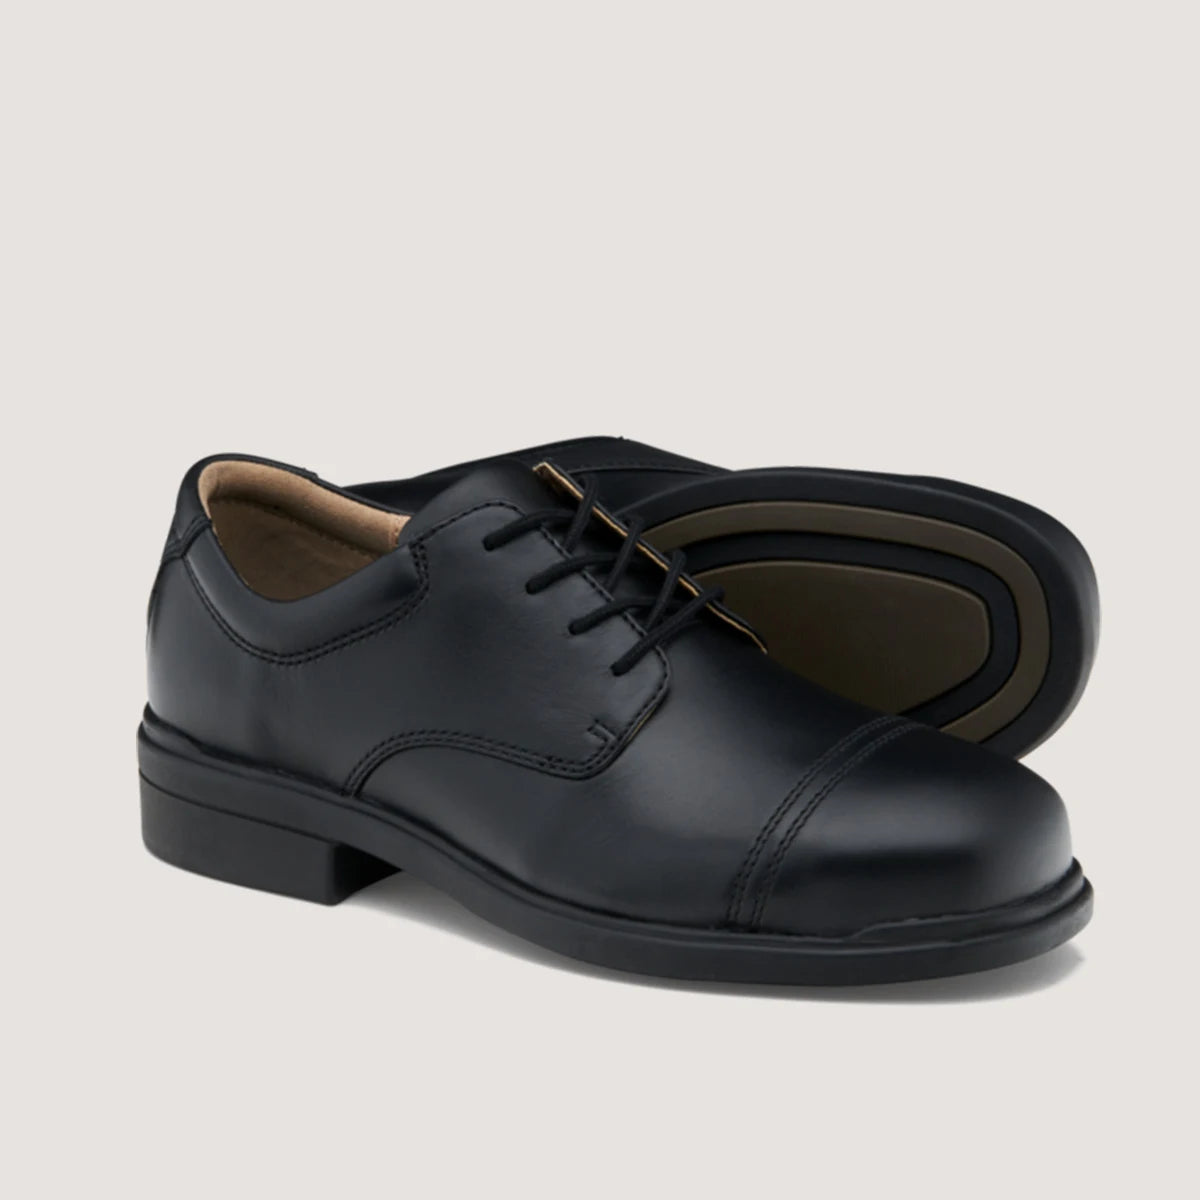 Blundstone 785 Classic Executive Safety Shoe-Black